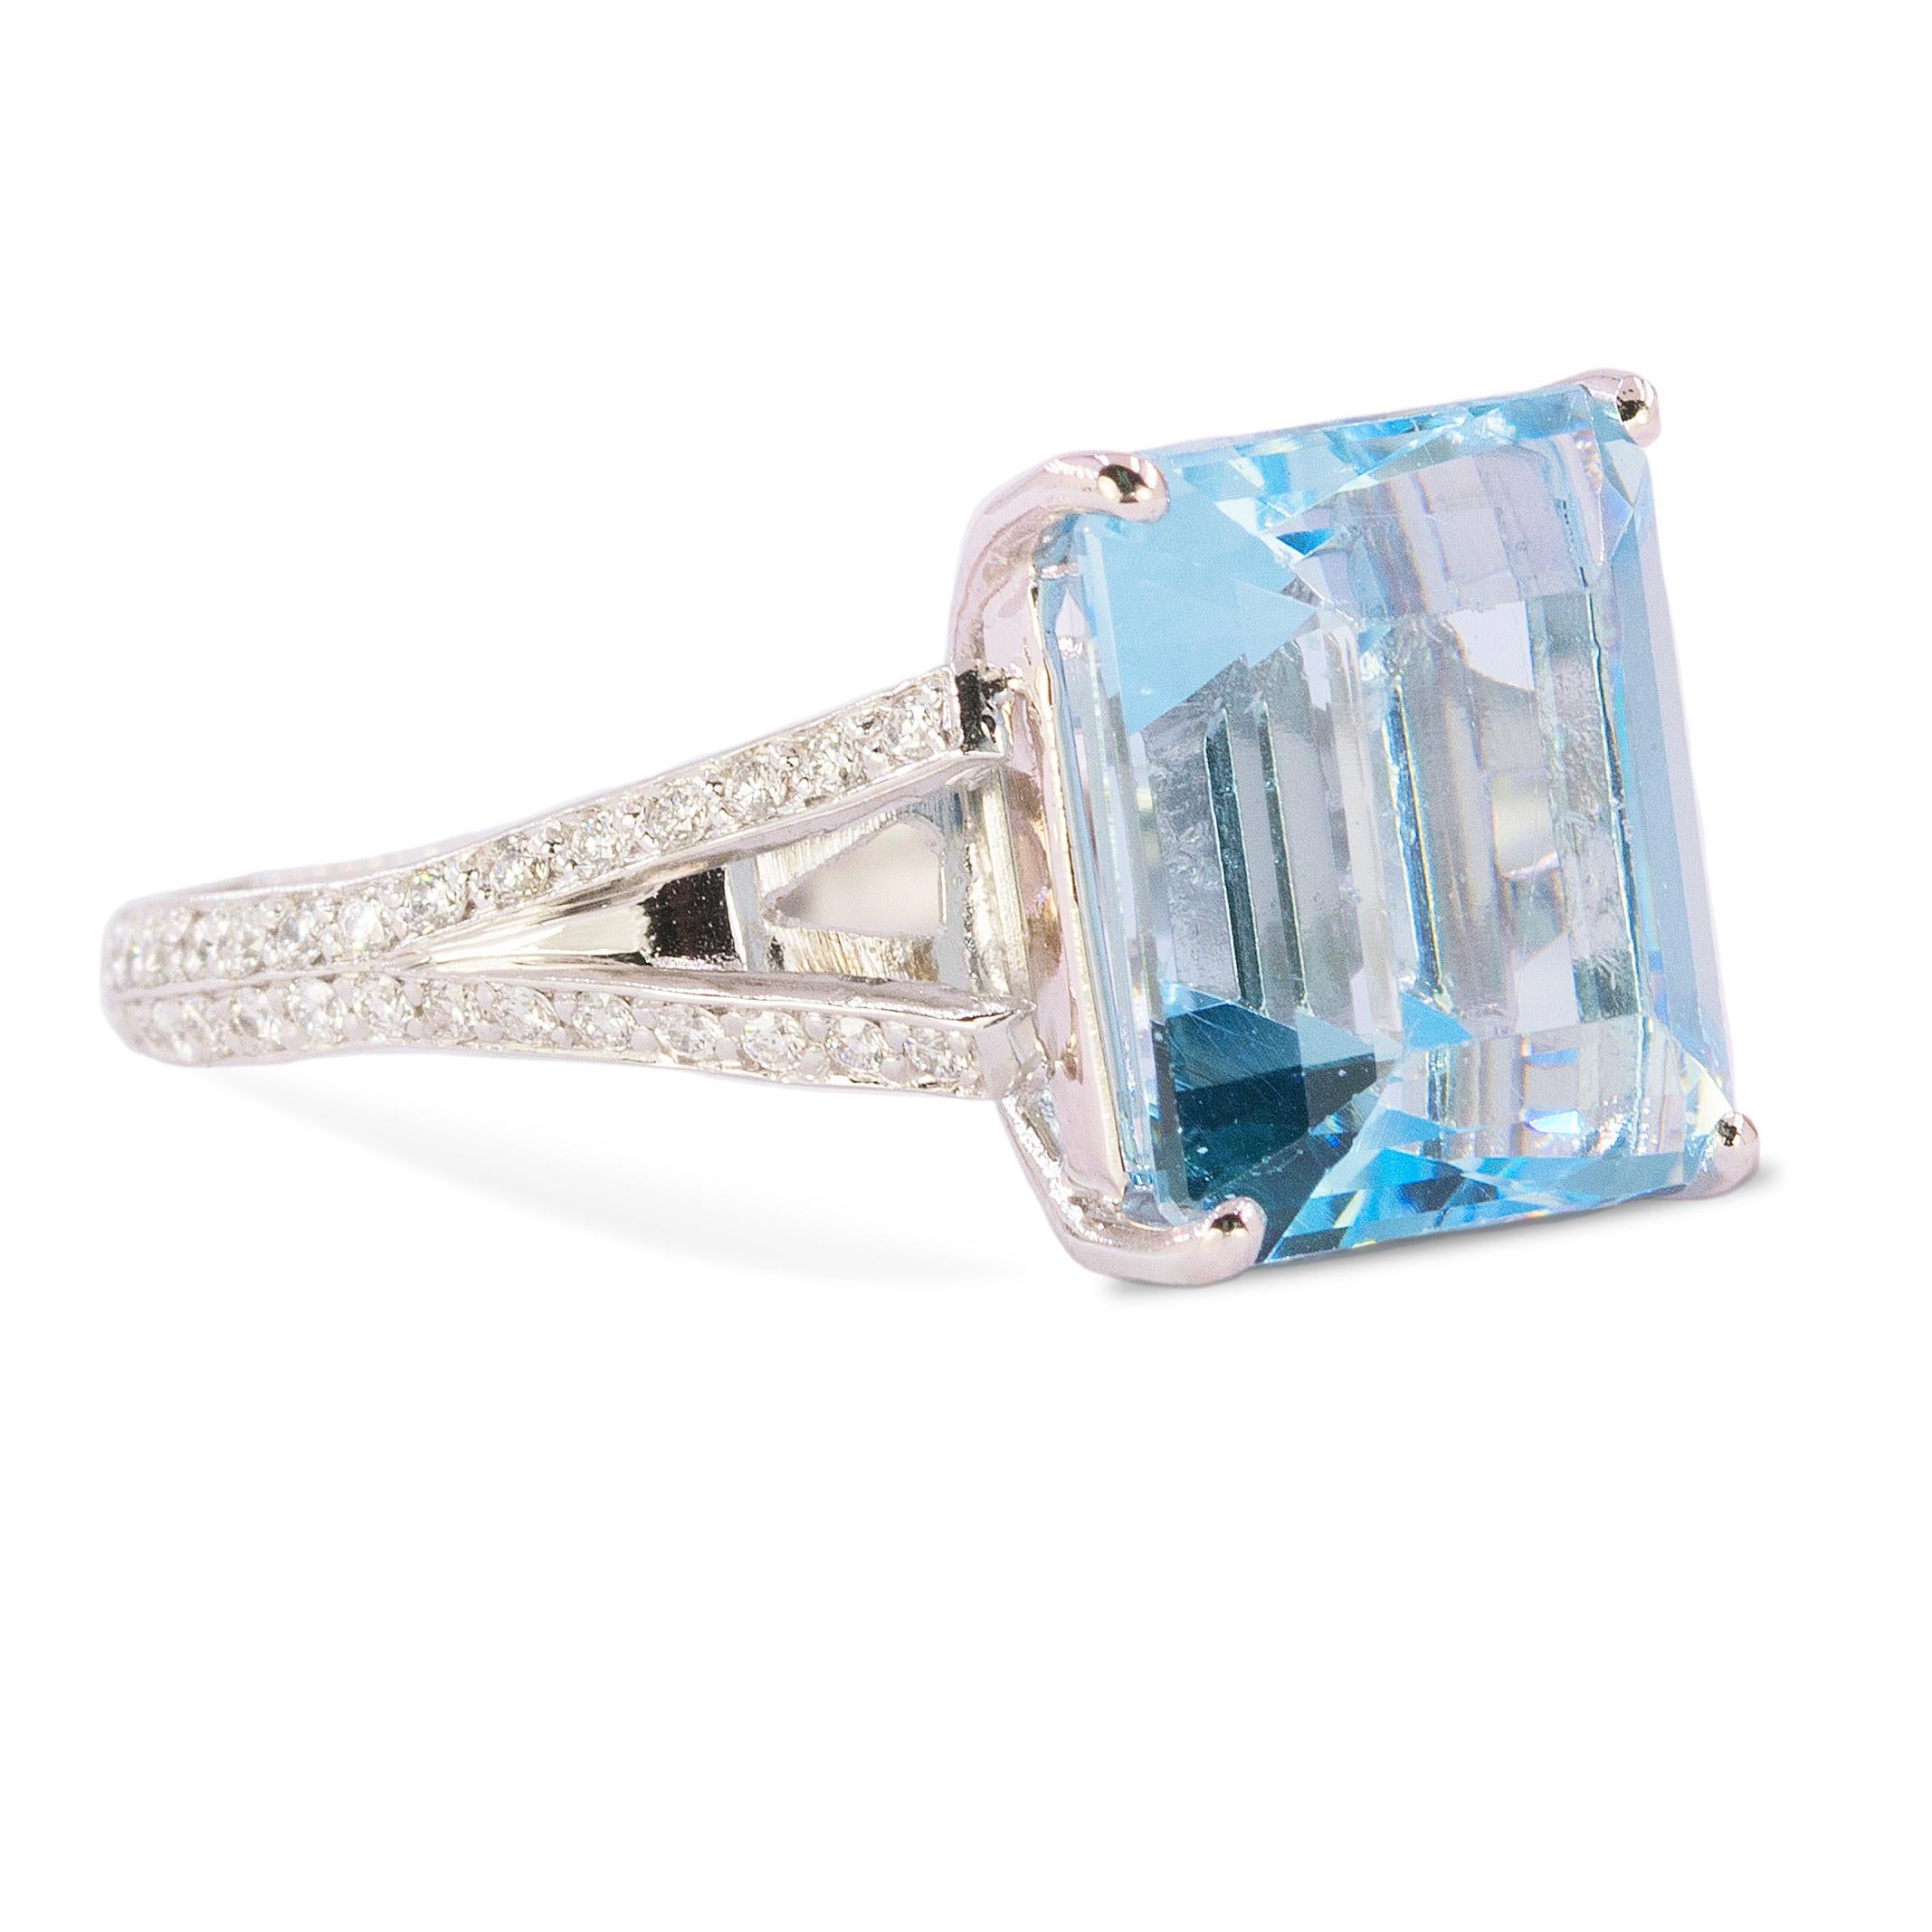 Platinum Ring with one 8.73 carat emerald cut Aquamarine and 56 round brilliant diamonds weighing 0.84 carats. 